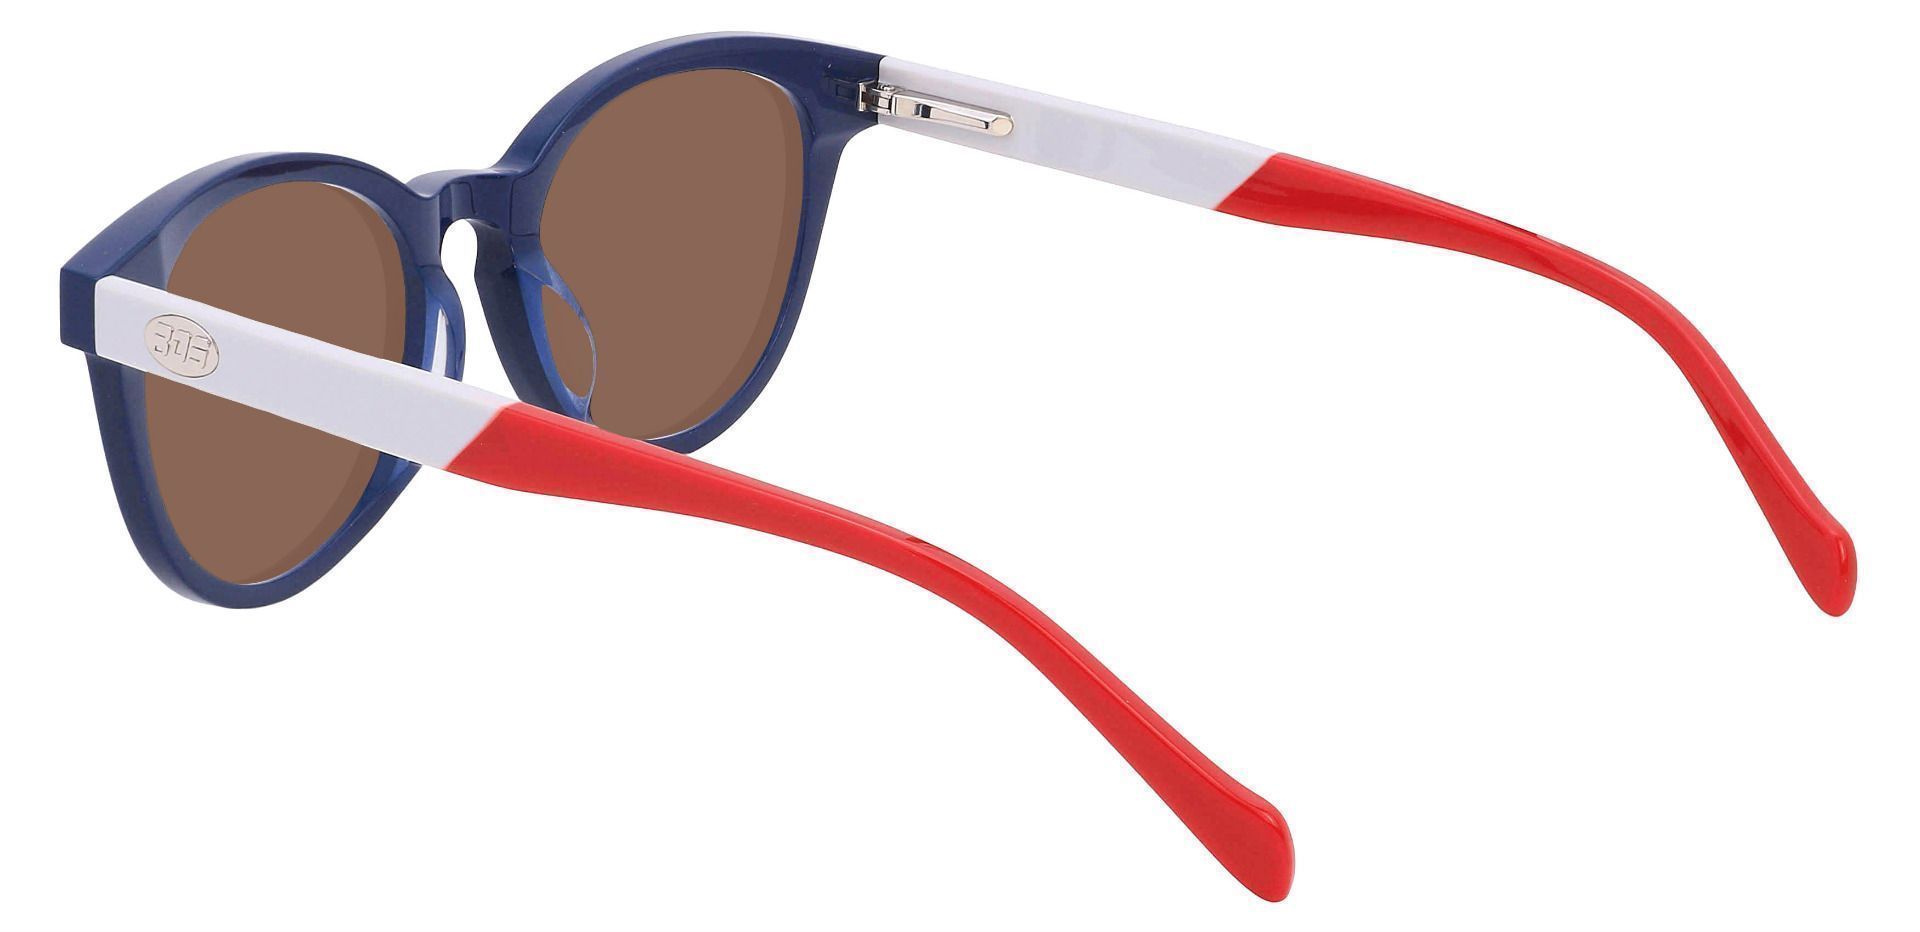 Common Oval Progressive Sunglasses - Blue Frame With Brown Lenses